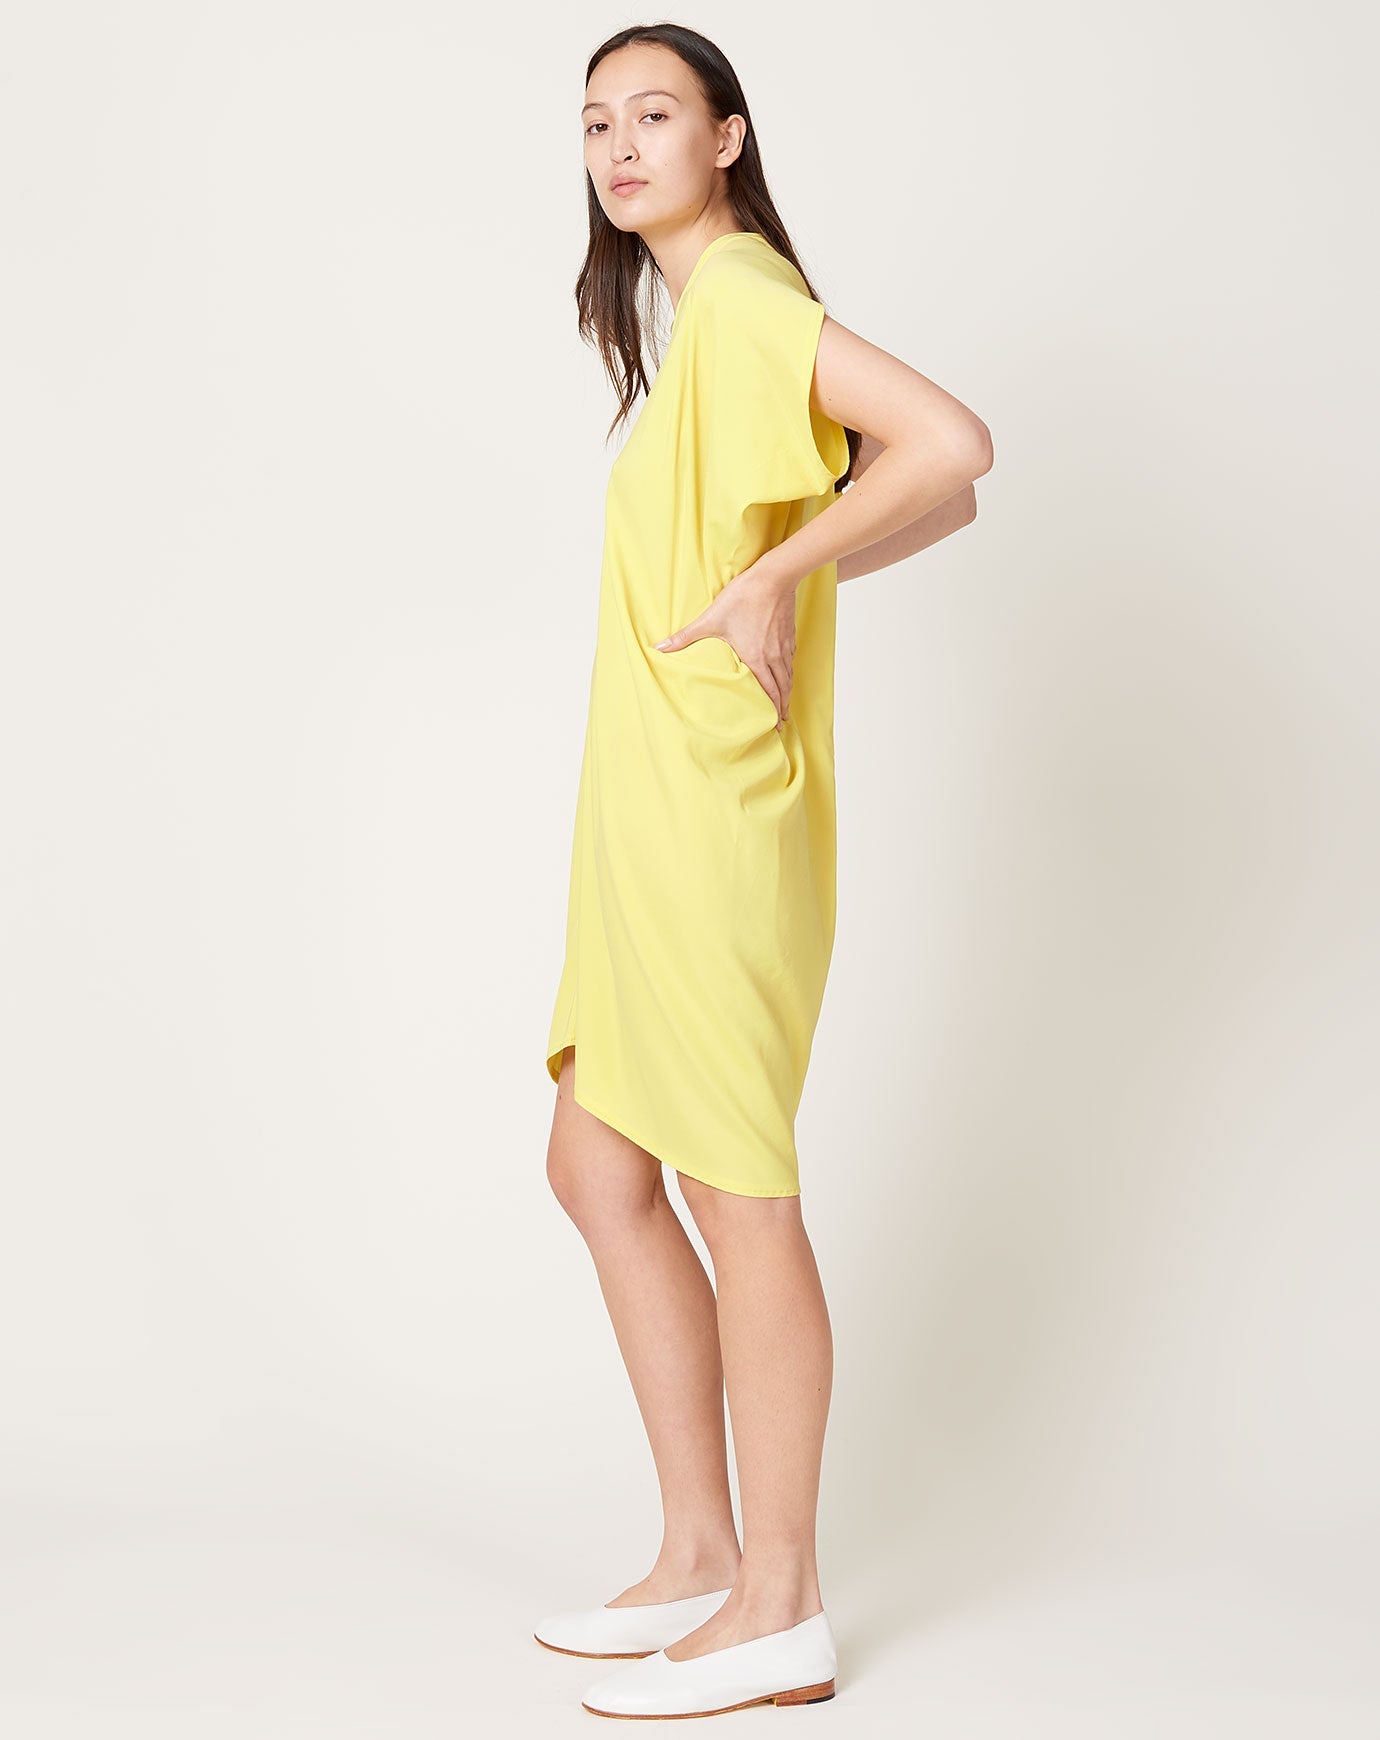 Zero + Maria Cornejo Simple Foil Mini Dress in Sunbeam